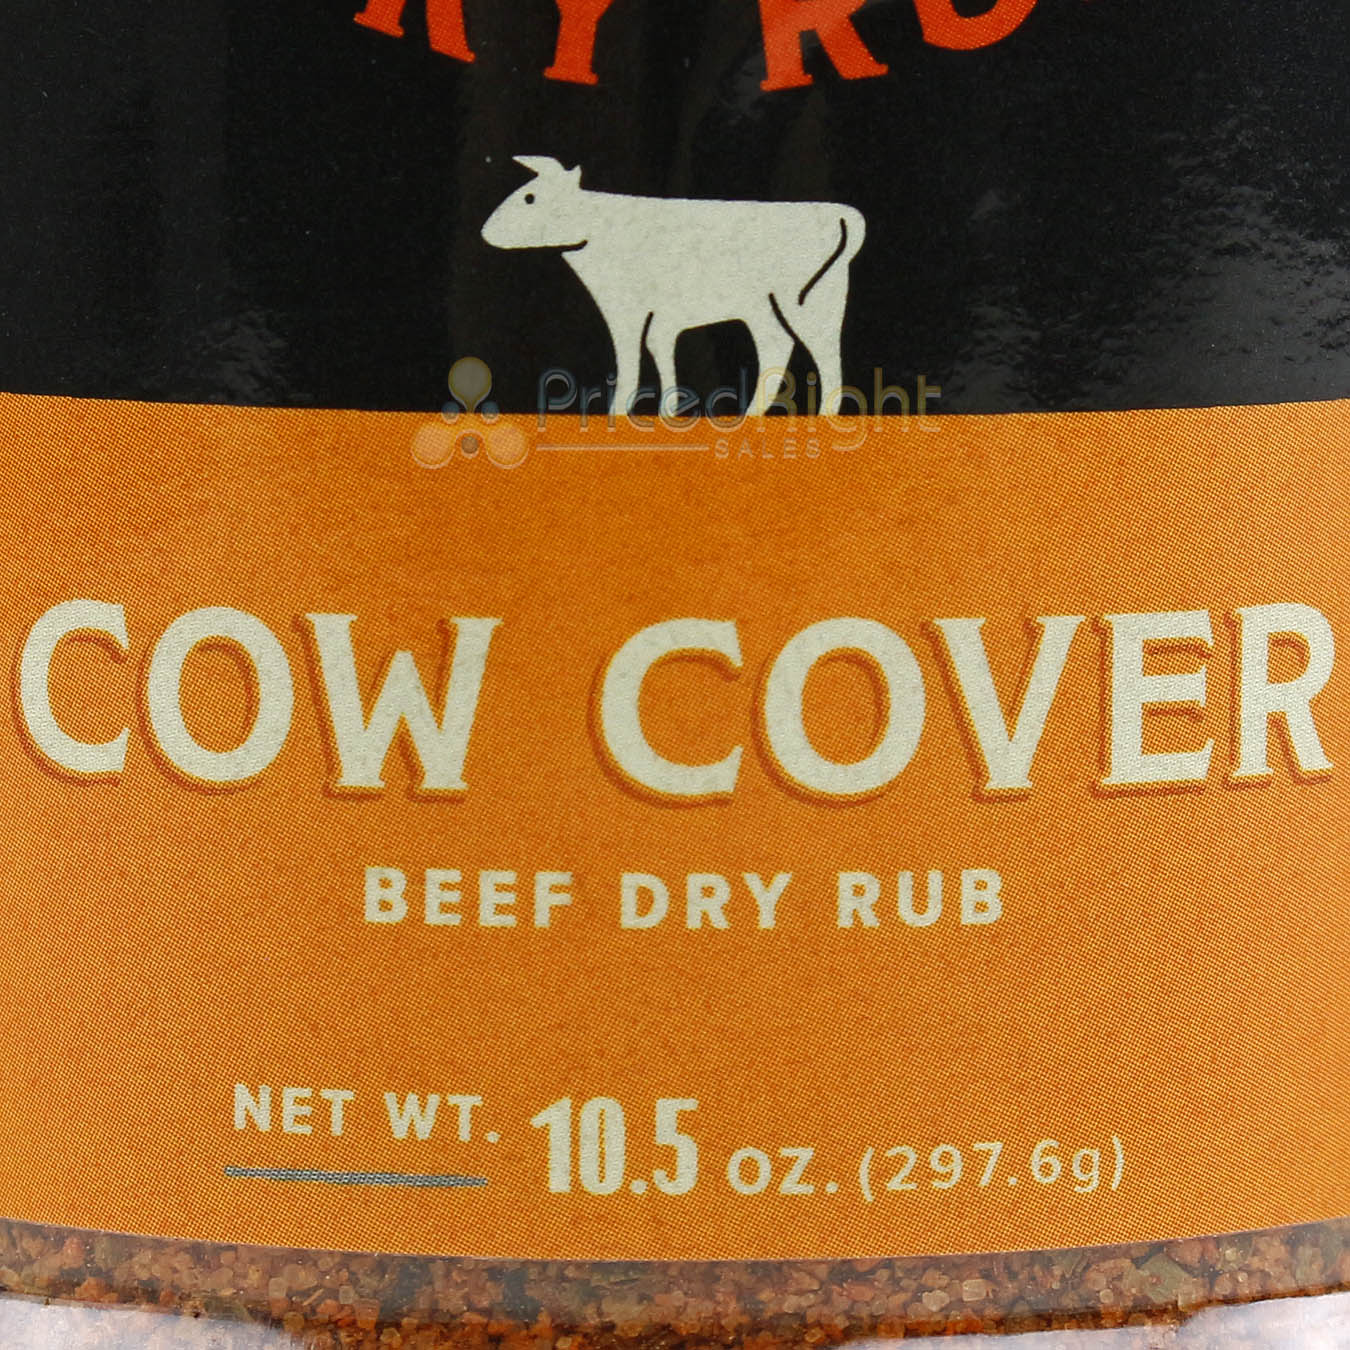 Kosmos Q Cow Cover Beef Dry Rub Competition BBQ Meat Dry Rub 10.5oz All Natural